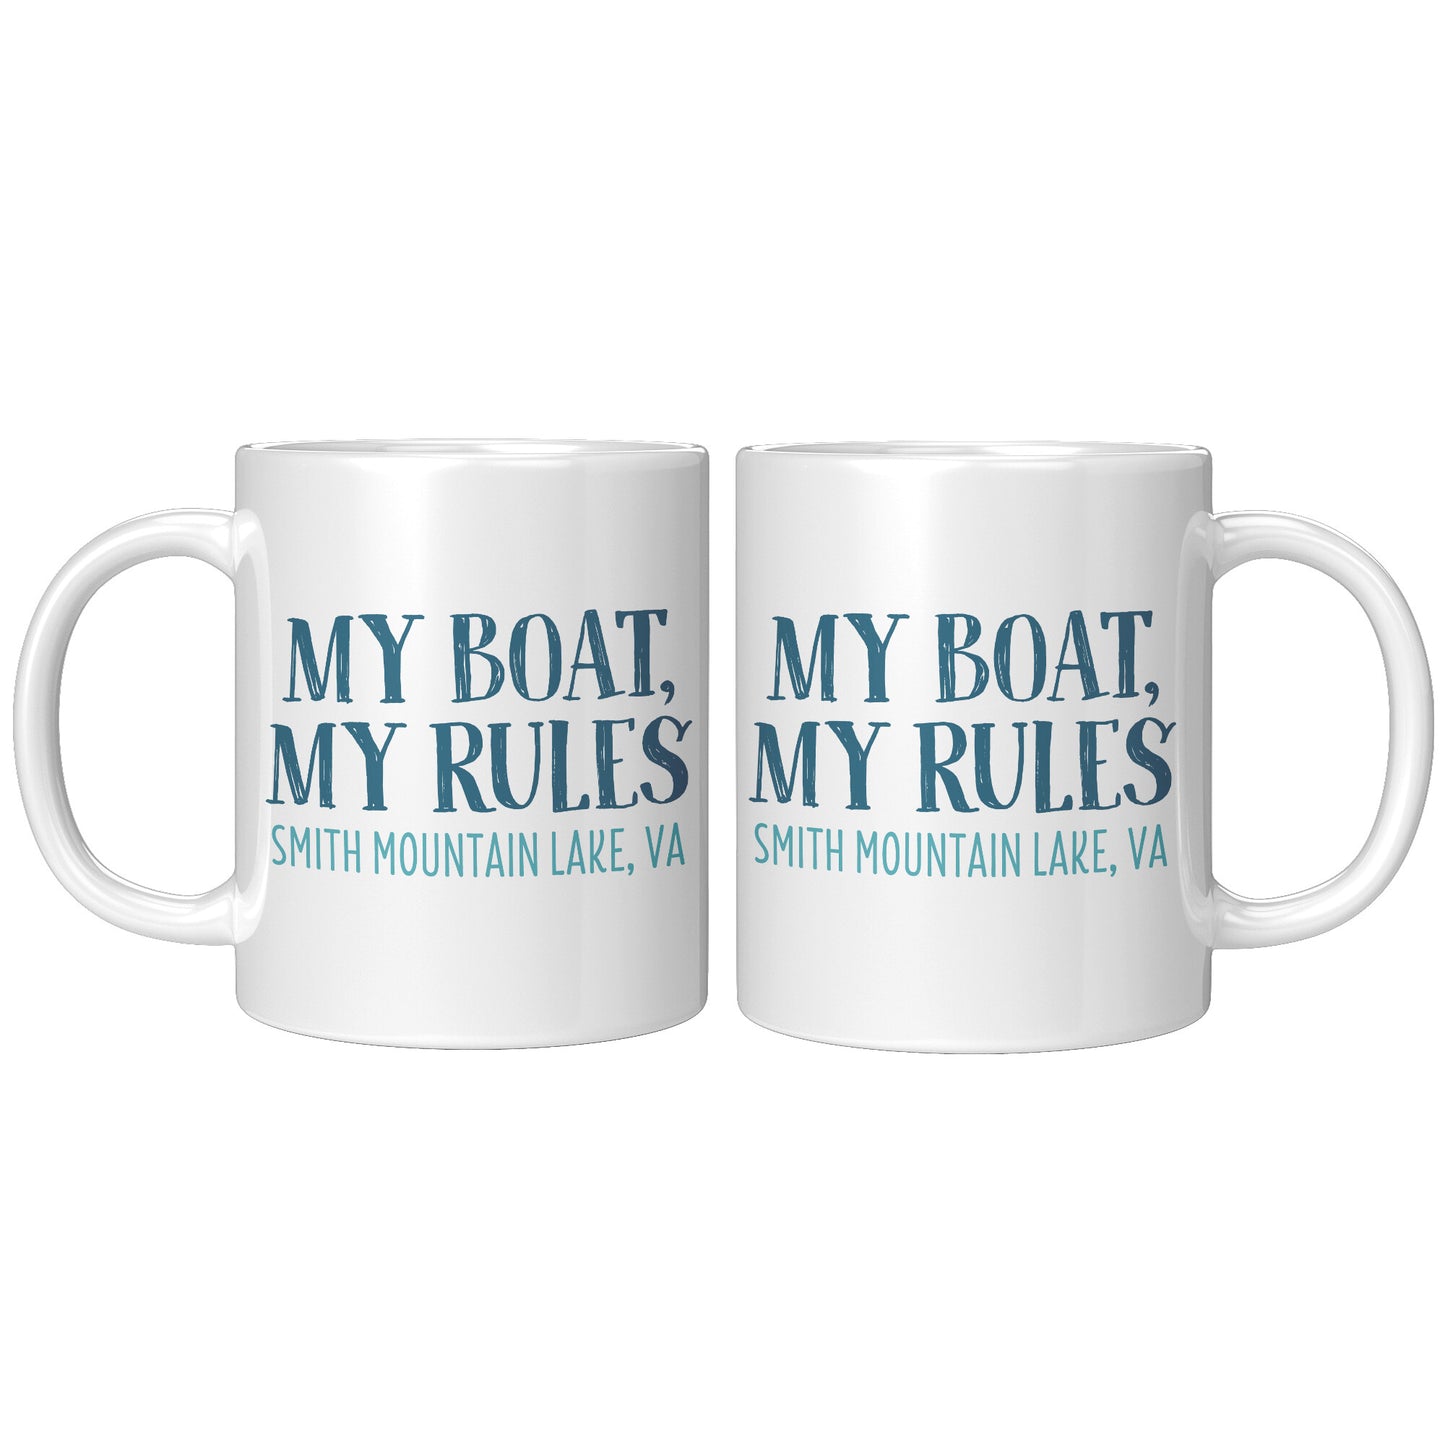 My Boat, My Rules - Smith Mountain Lake, VA Funny Coffee Mug